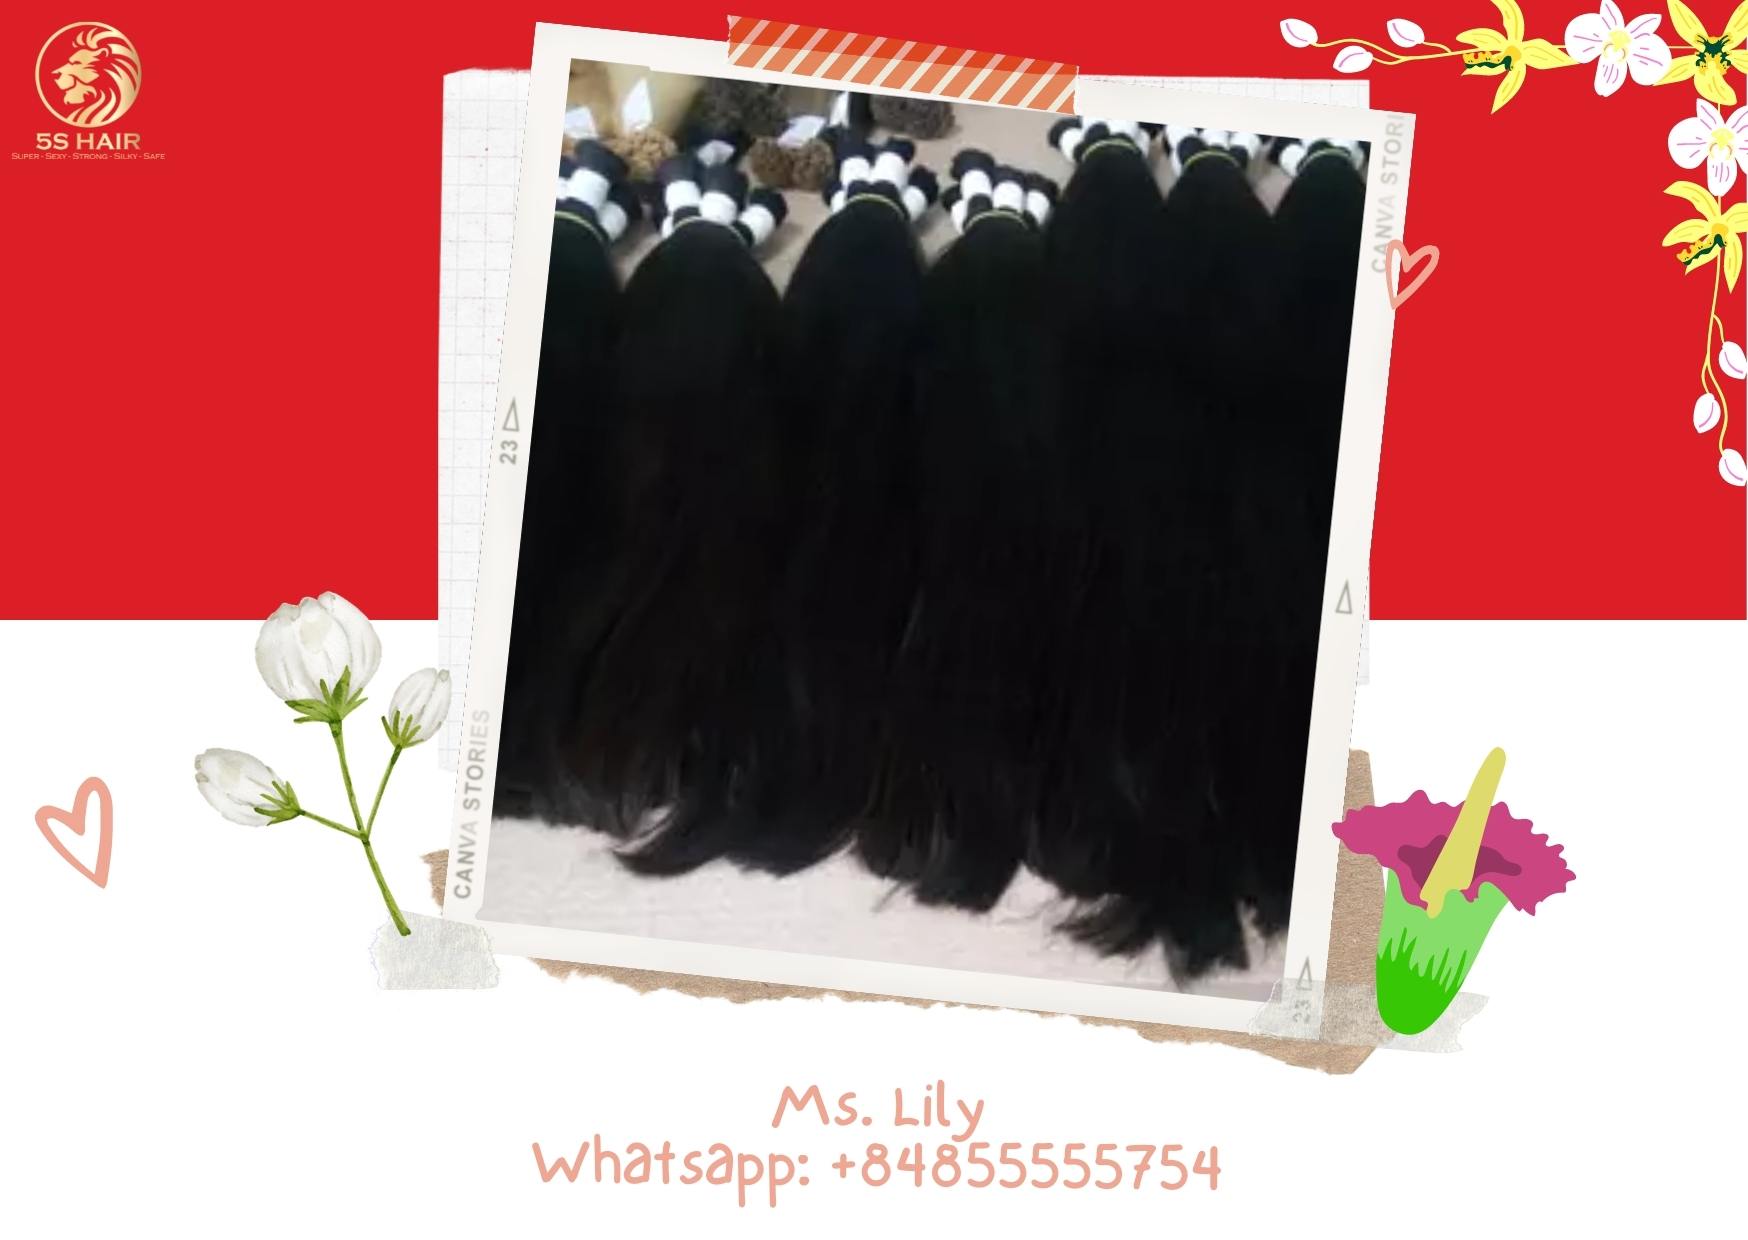 raw-southeast-asian-hair-vendors-the-best-quality-hair10